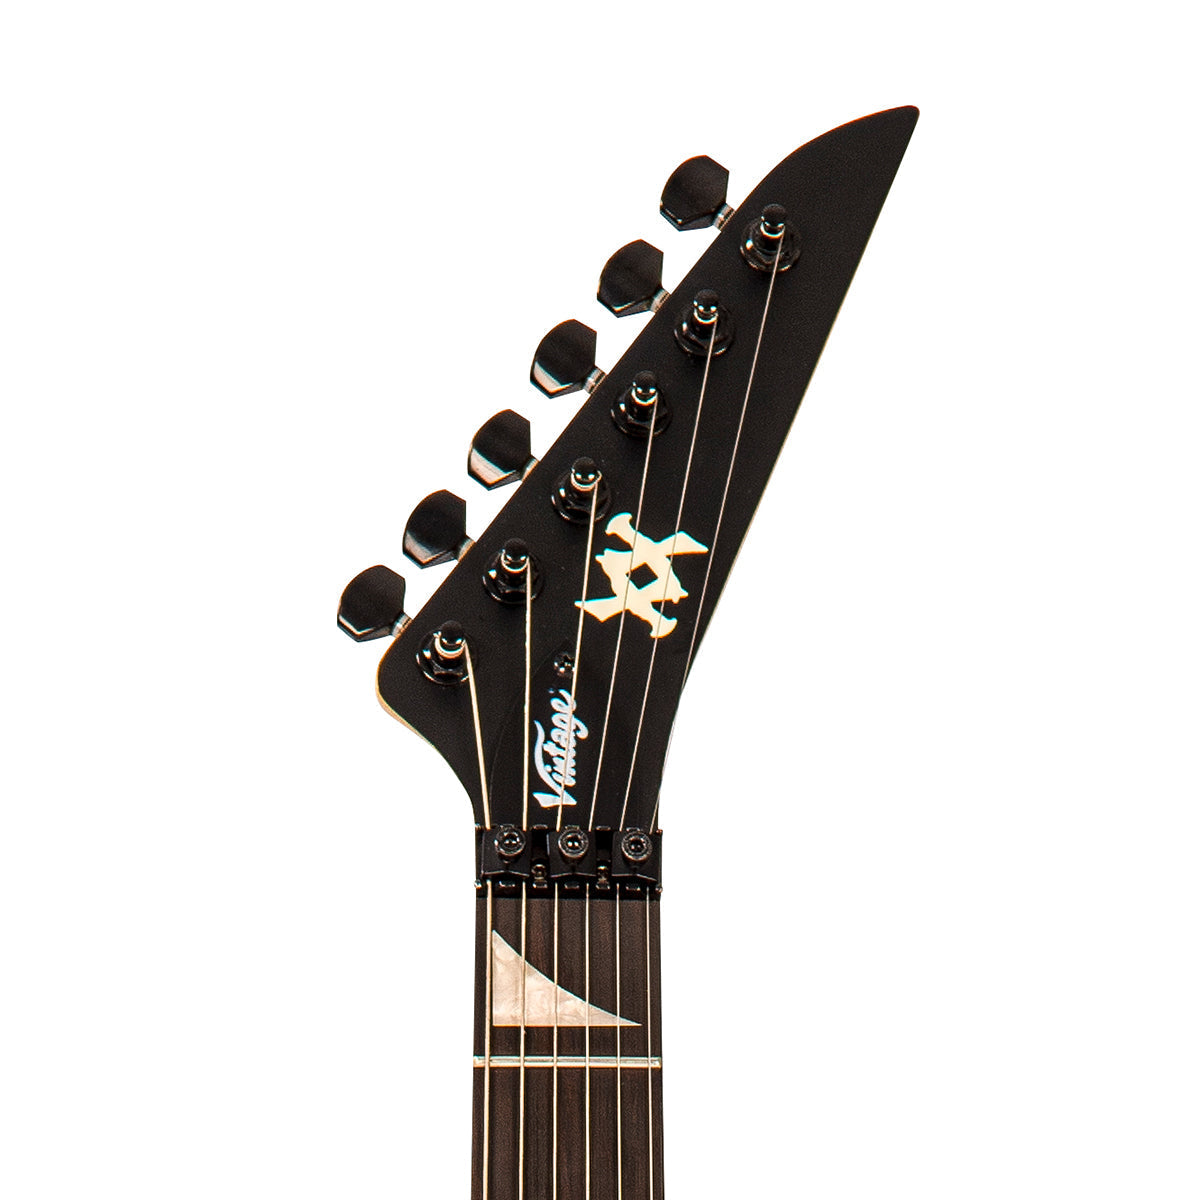 Vintage VMX Series Raider Electric Guitar ~ Satin Black, Electric Guitar for sale at Richards Guitars.